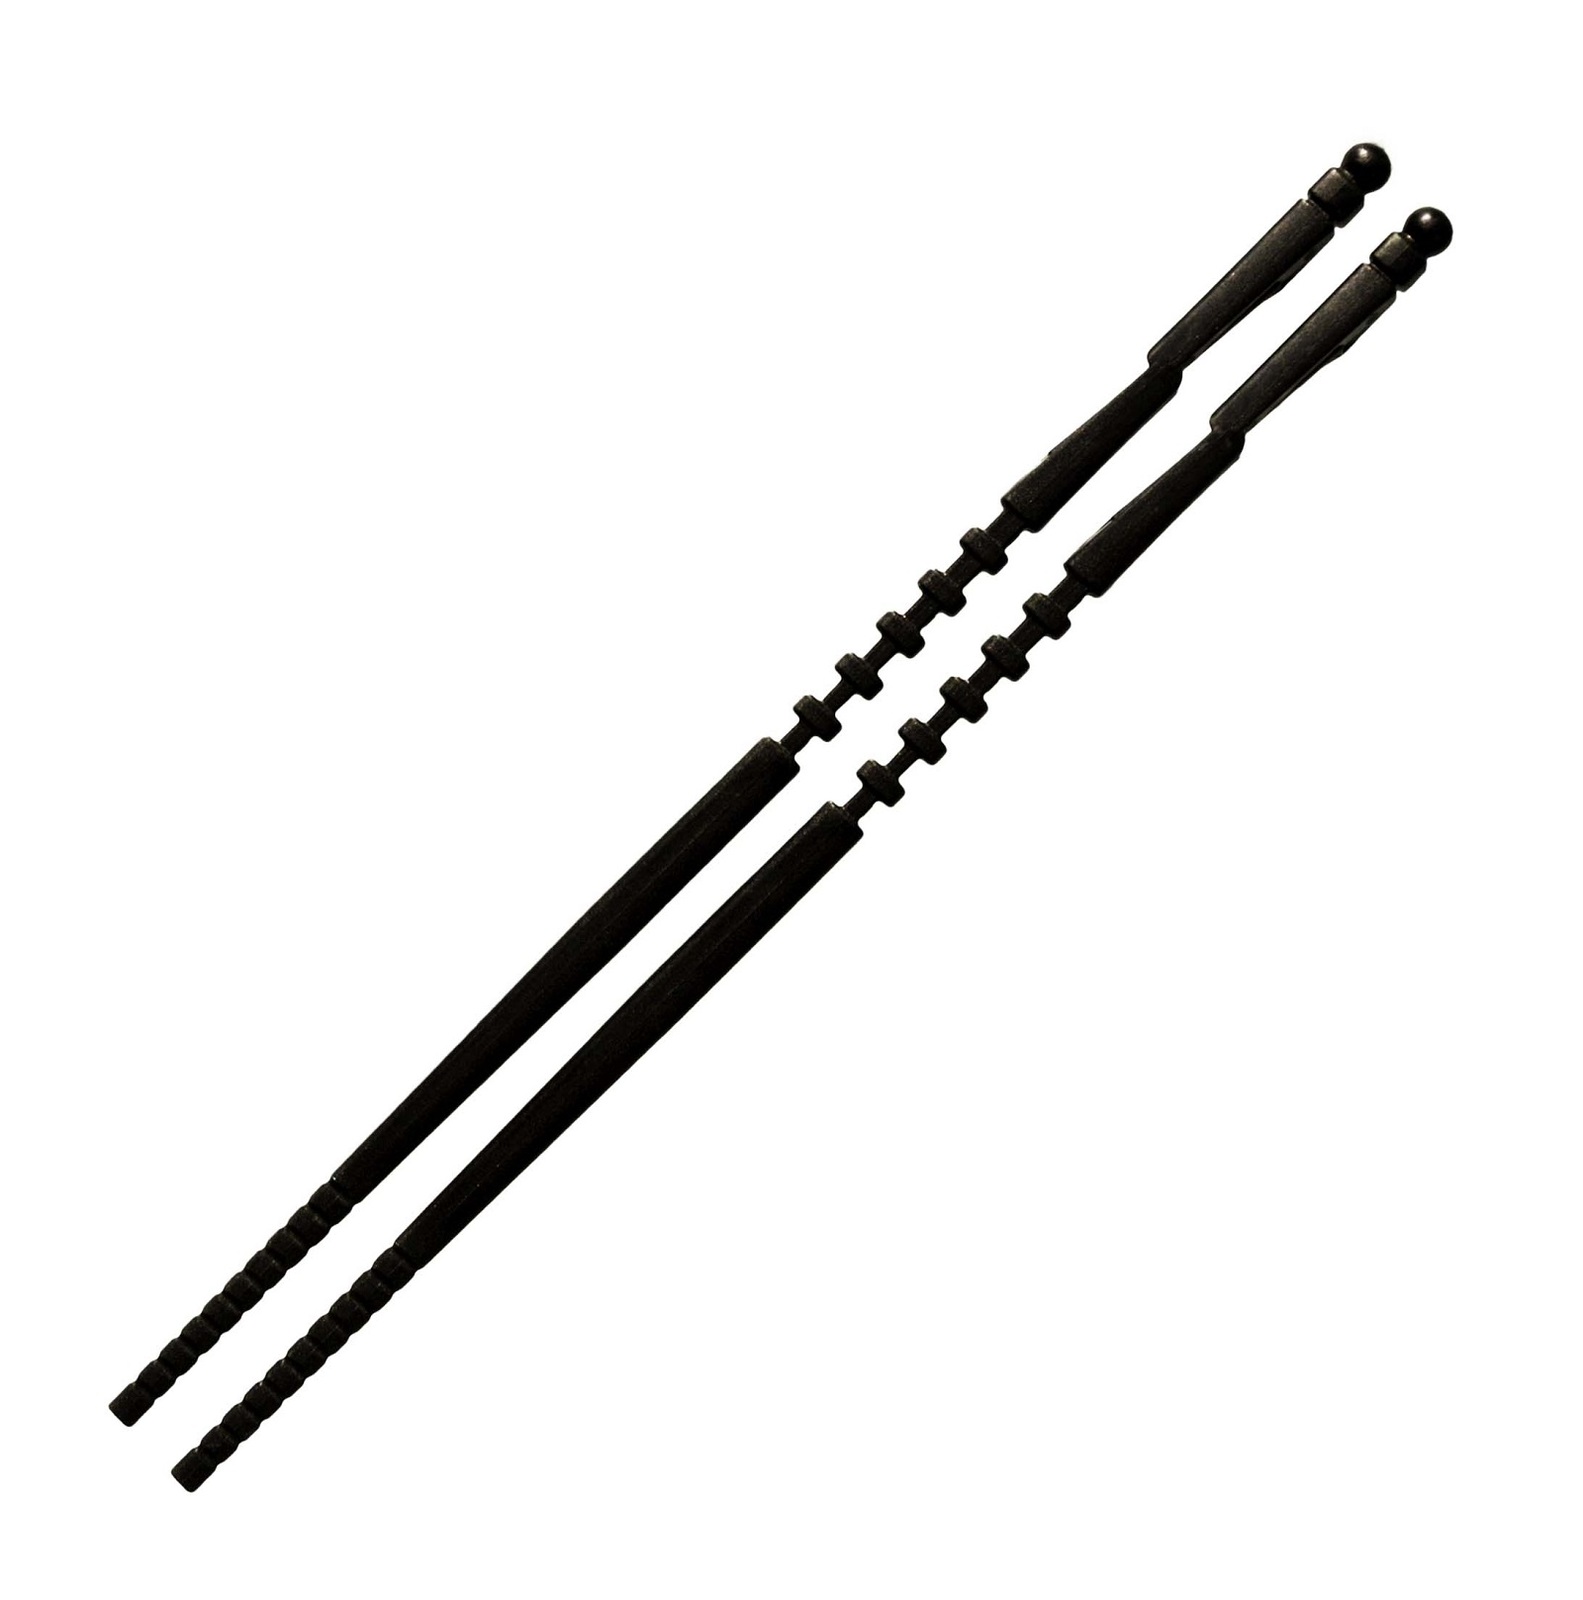 5 Pairs Kwik-Stix Crossover Chopsticks Black 